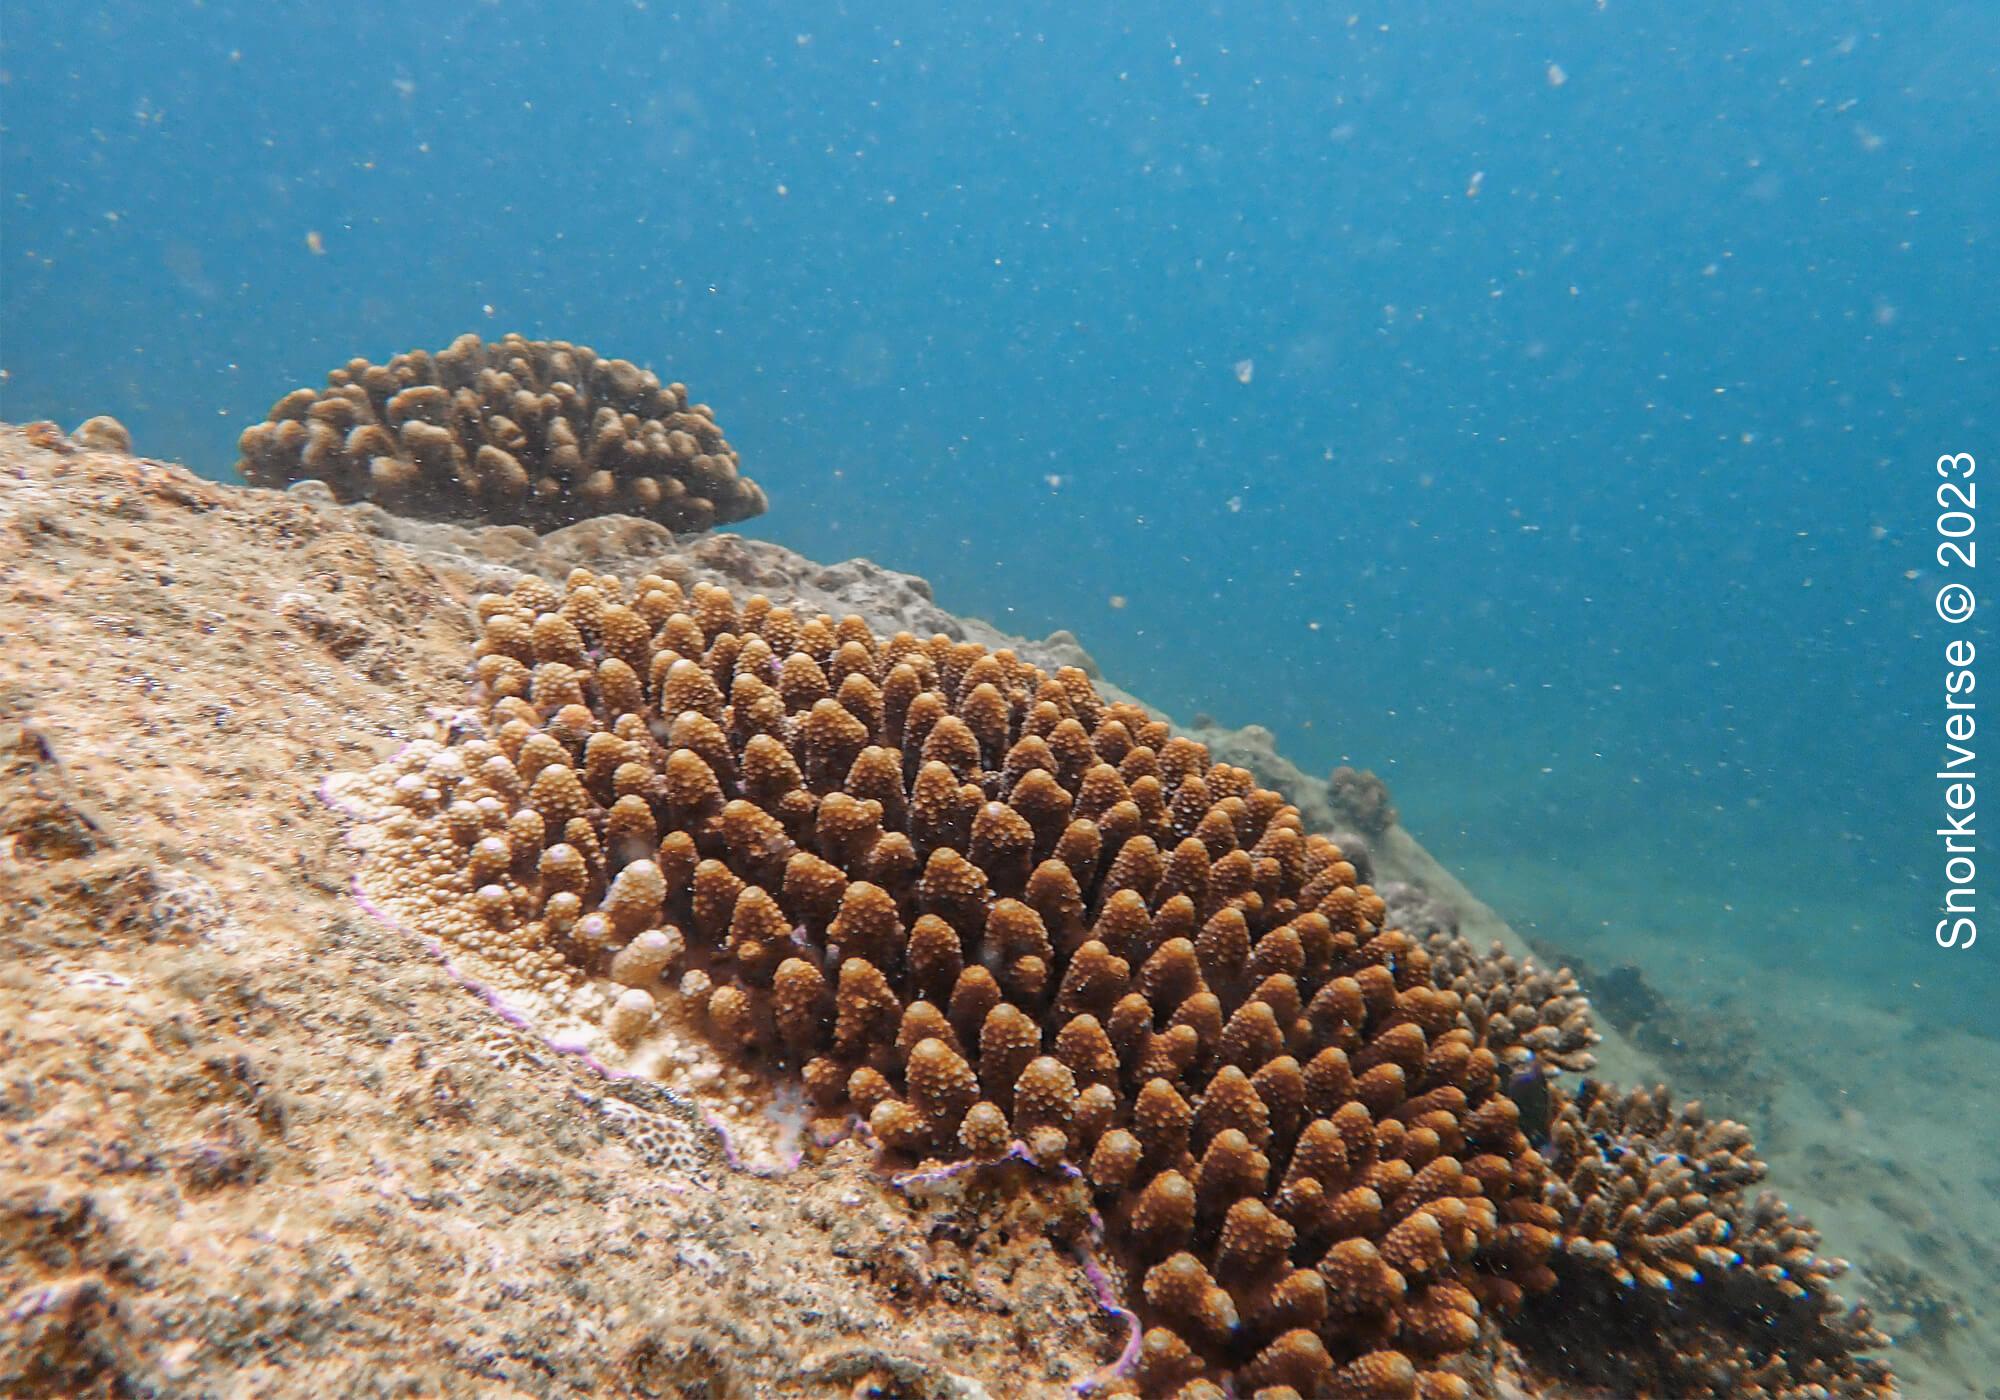 Coral growing on rocks